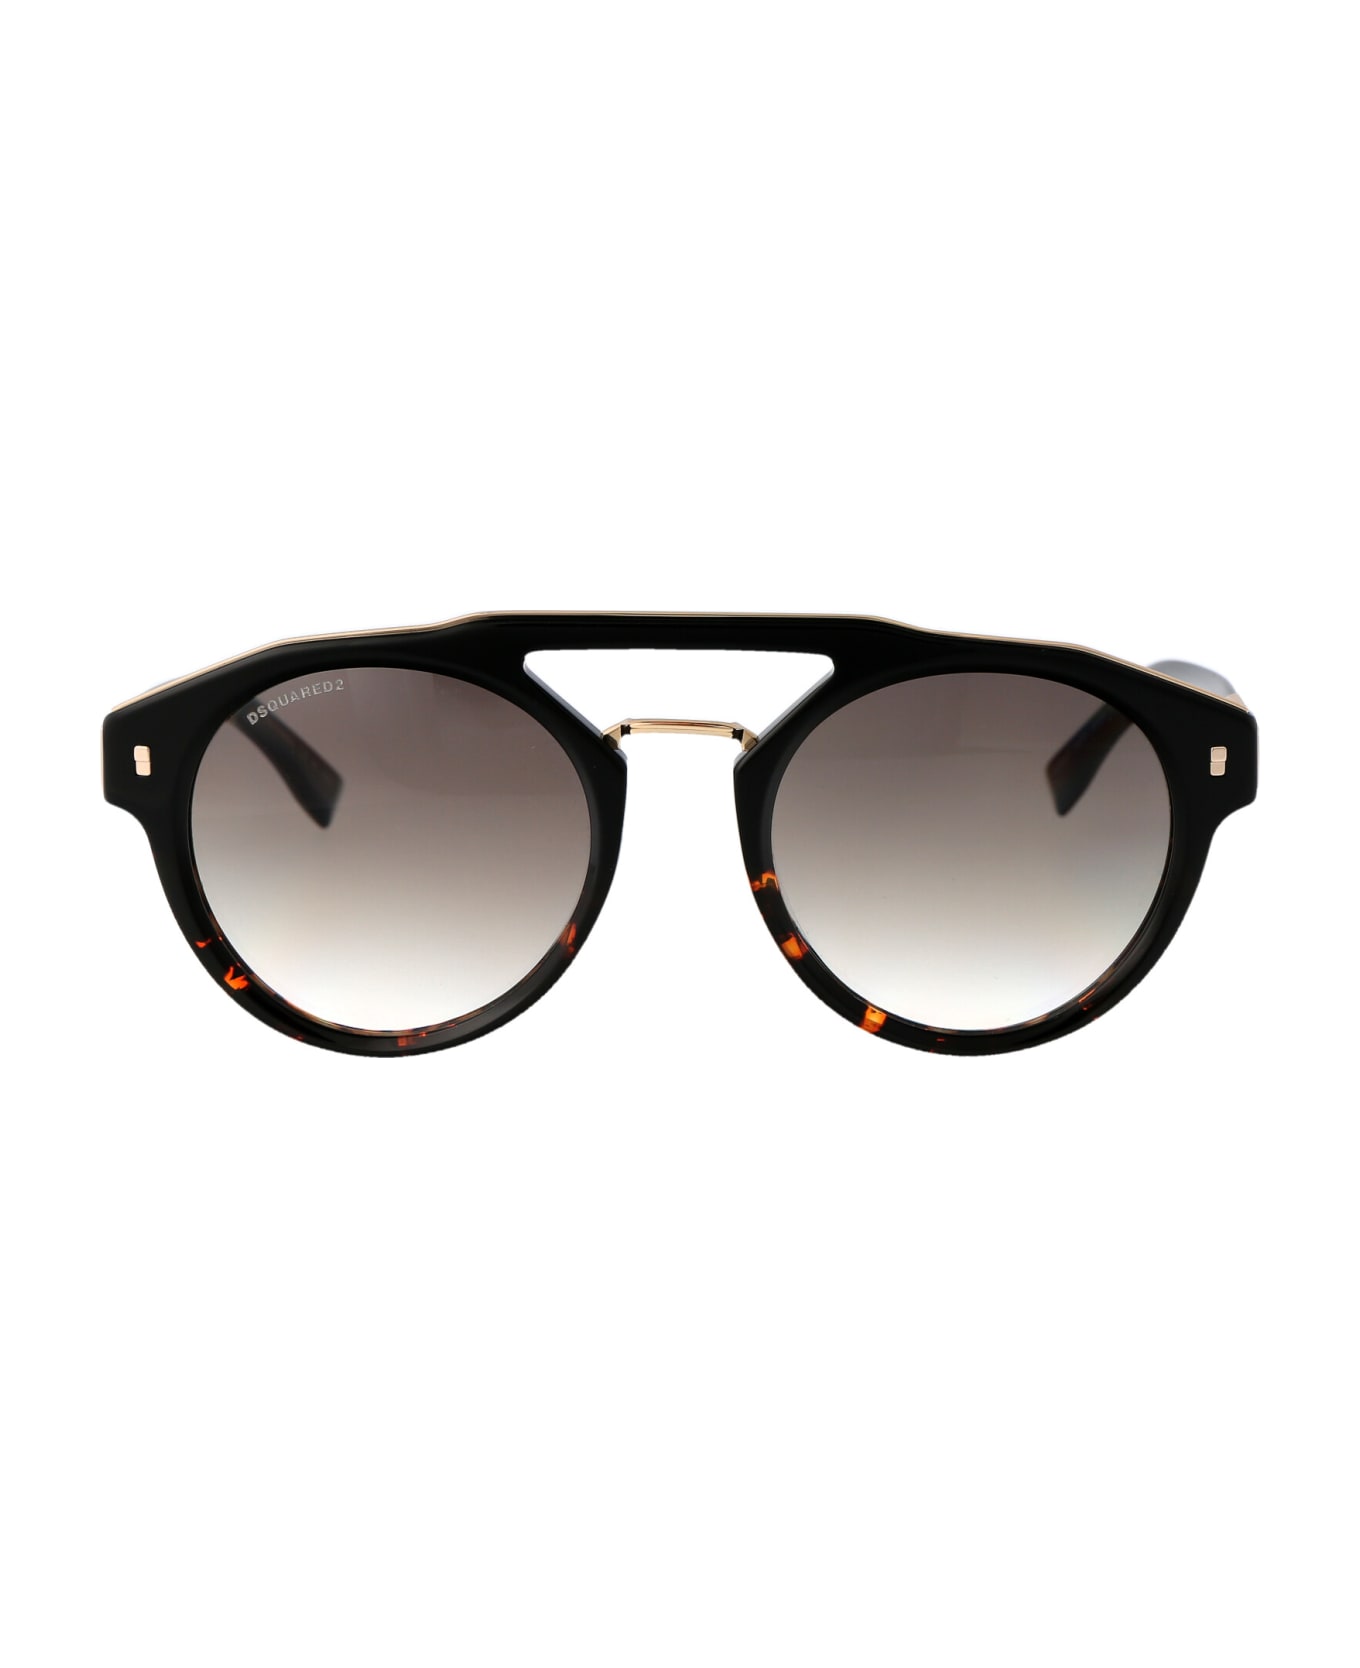 Dsquared2 Eyewear D2 0085/s Sunglasses - WR79K BLACK HAVANA サングラス